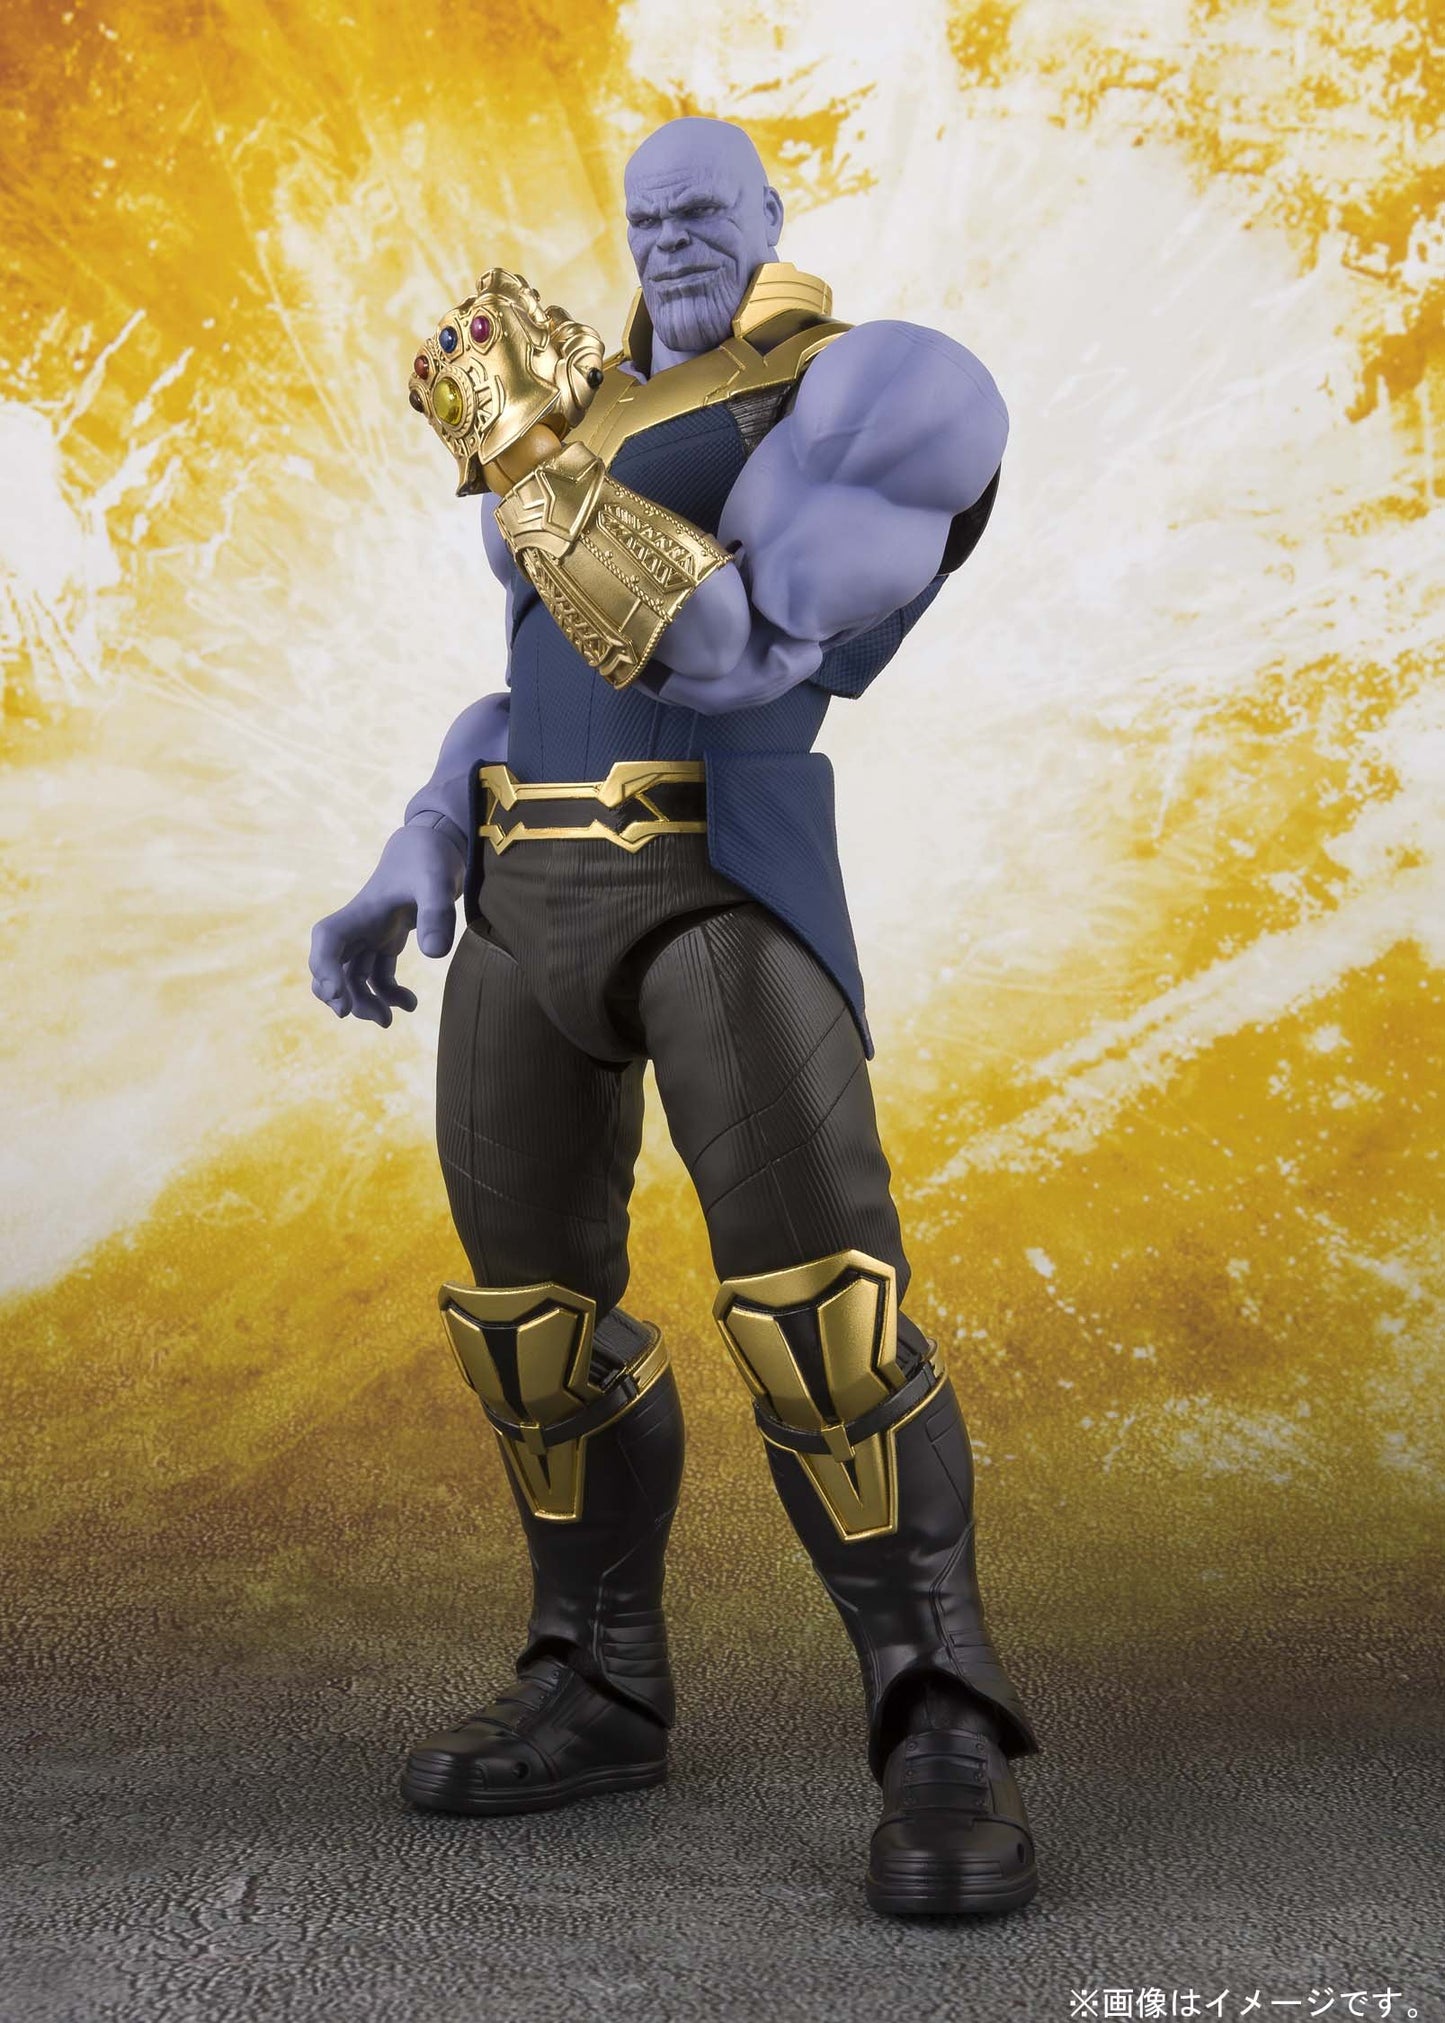 Bandai Tamashii Nations S.H. Figuarts Thanos Avengers: Infinity War Action Figure